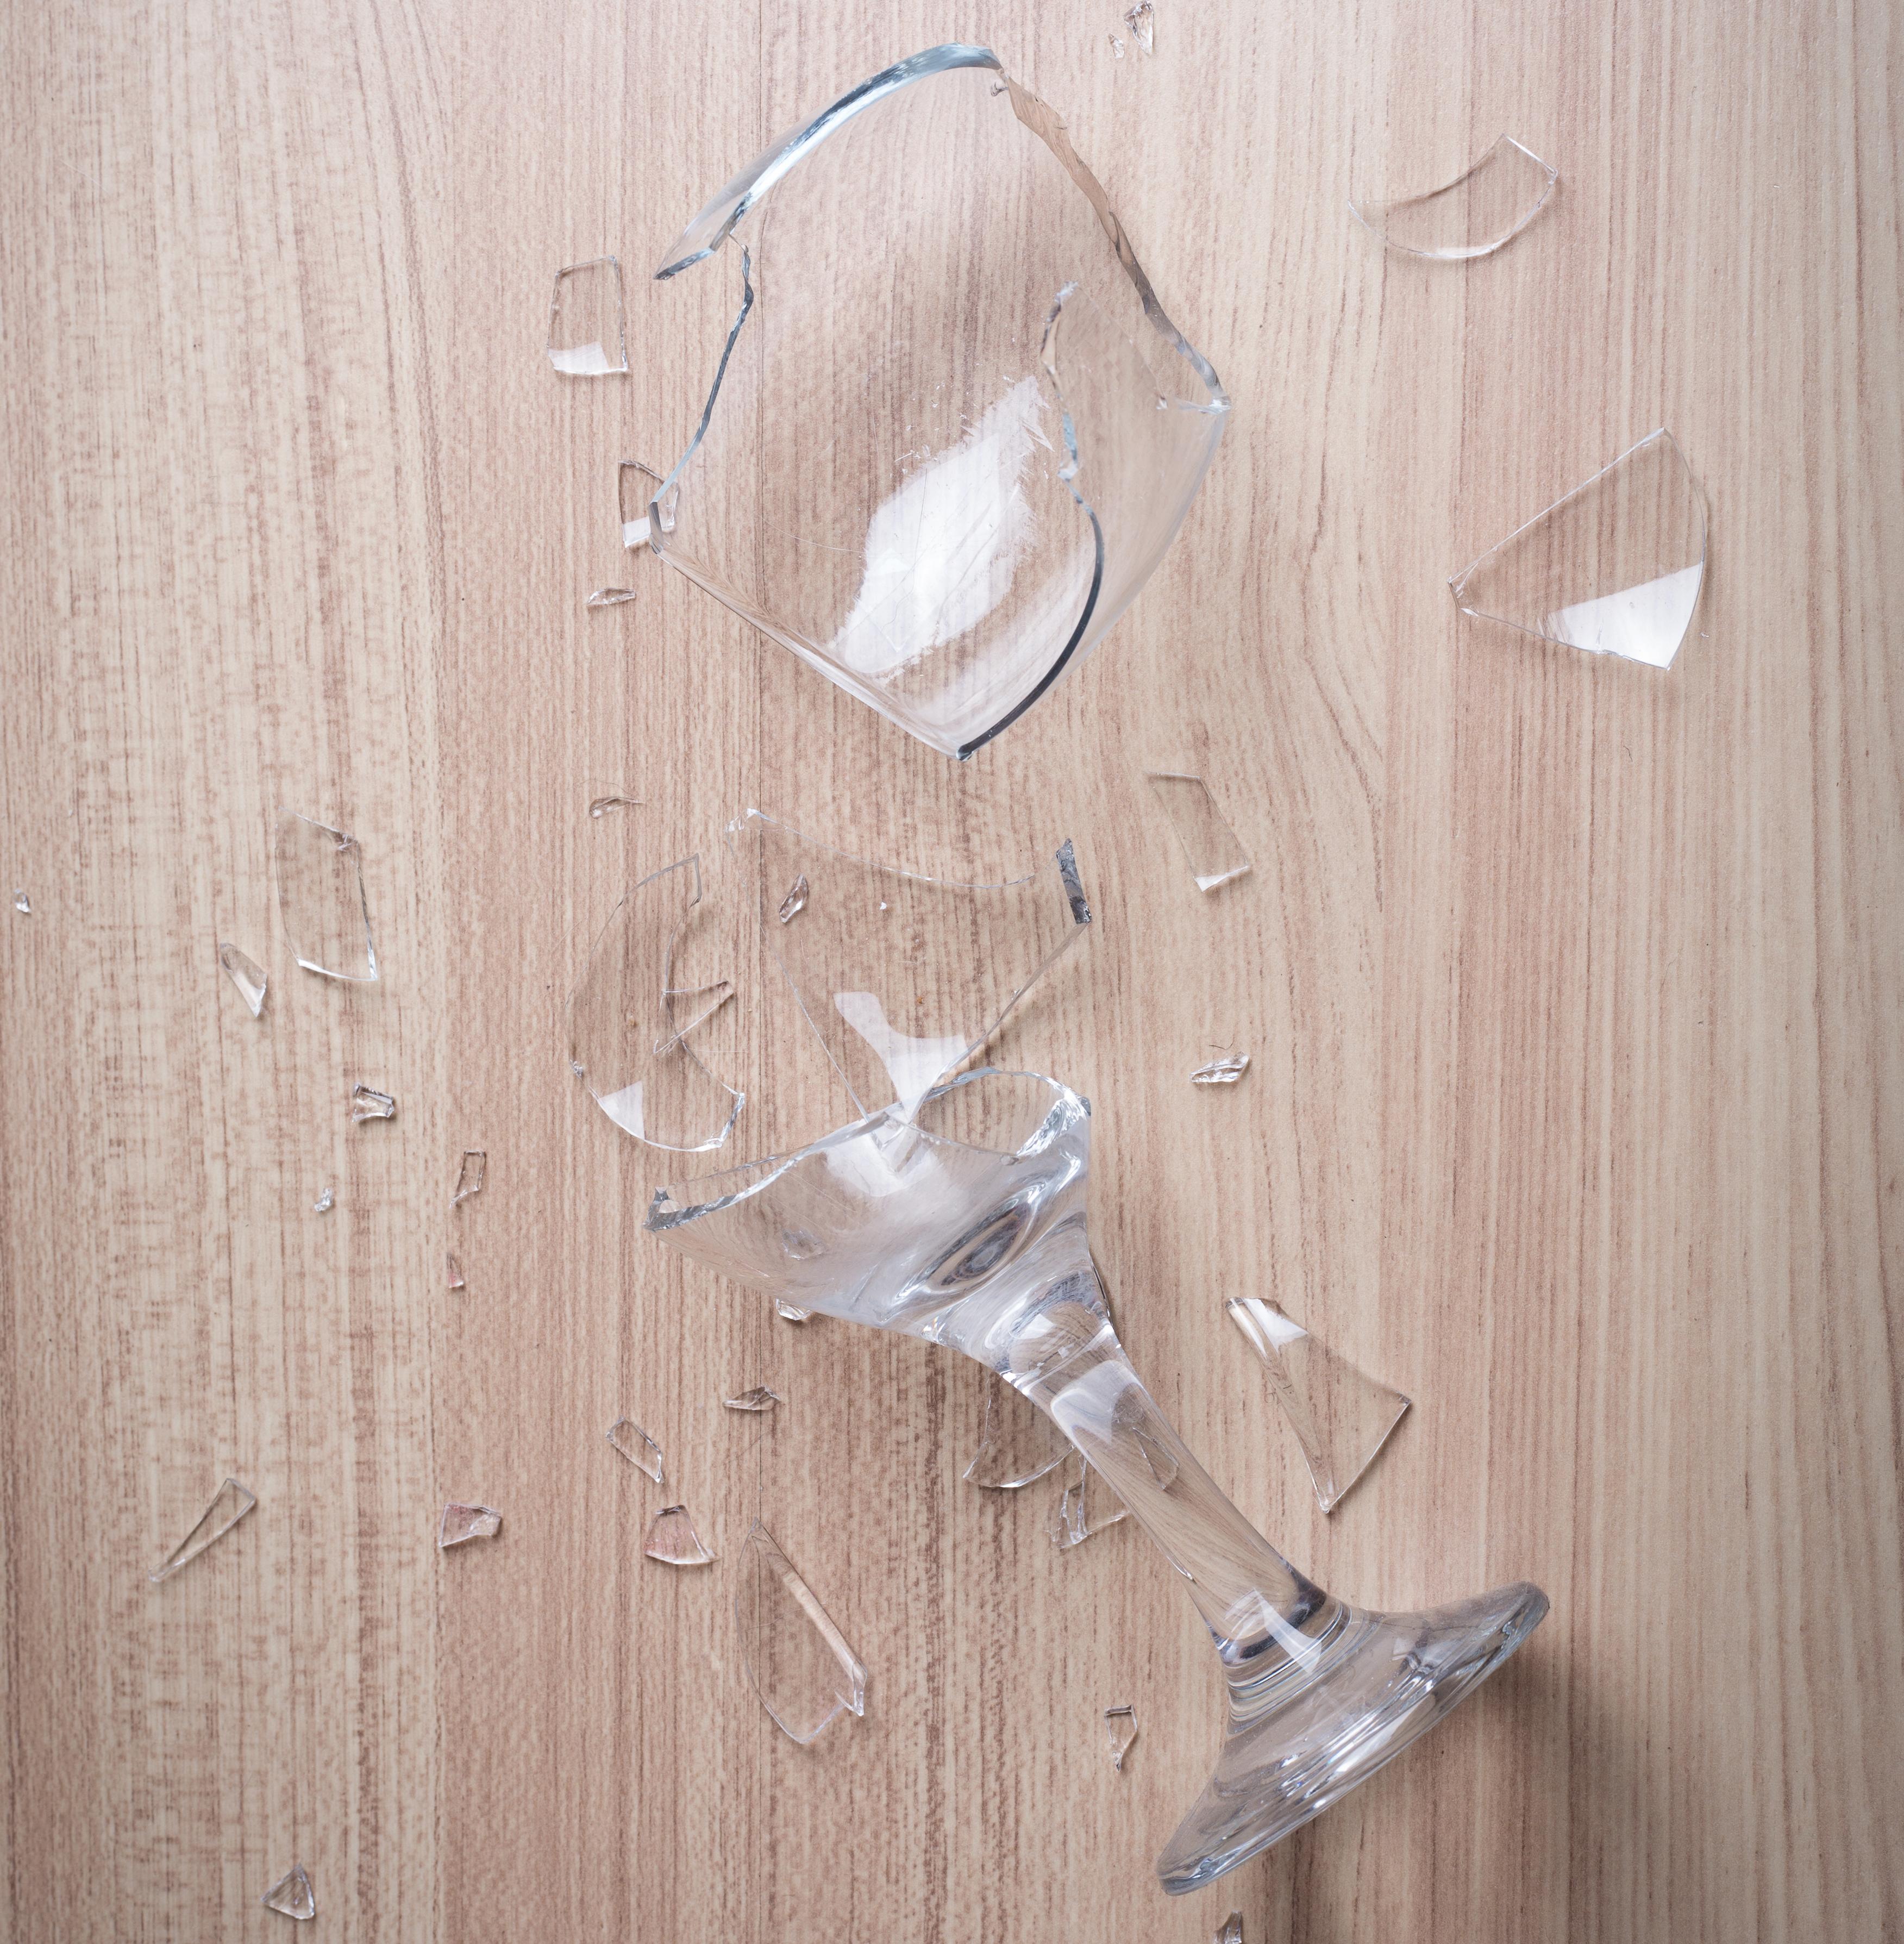 MELKEKARTONG-MAT: Mange putter nok knuste glass i en melkekartong og kaster den i restsøppelet.